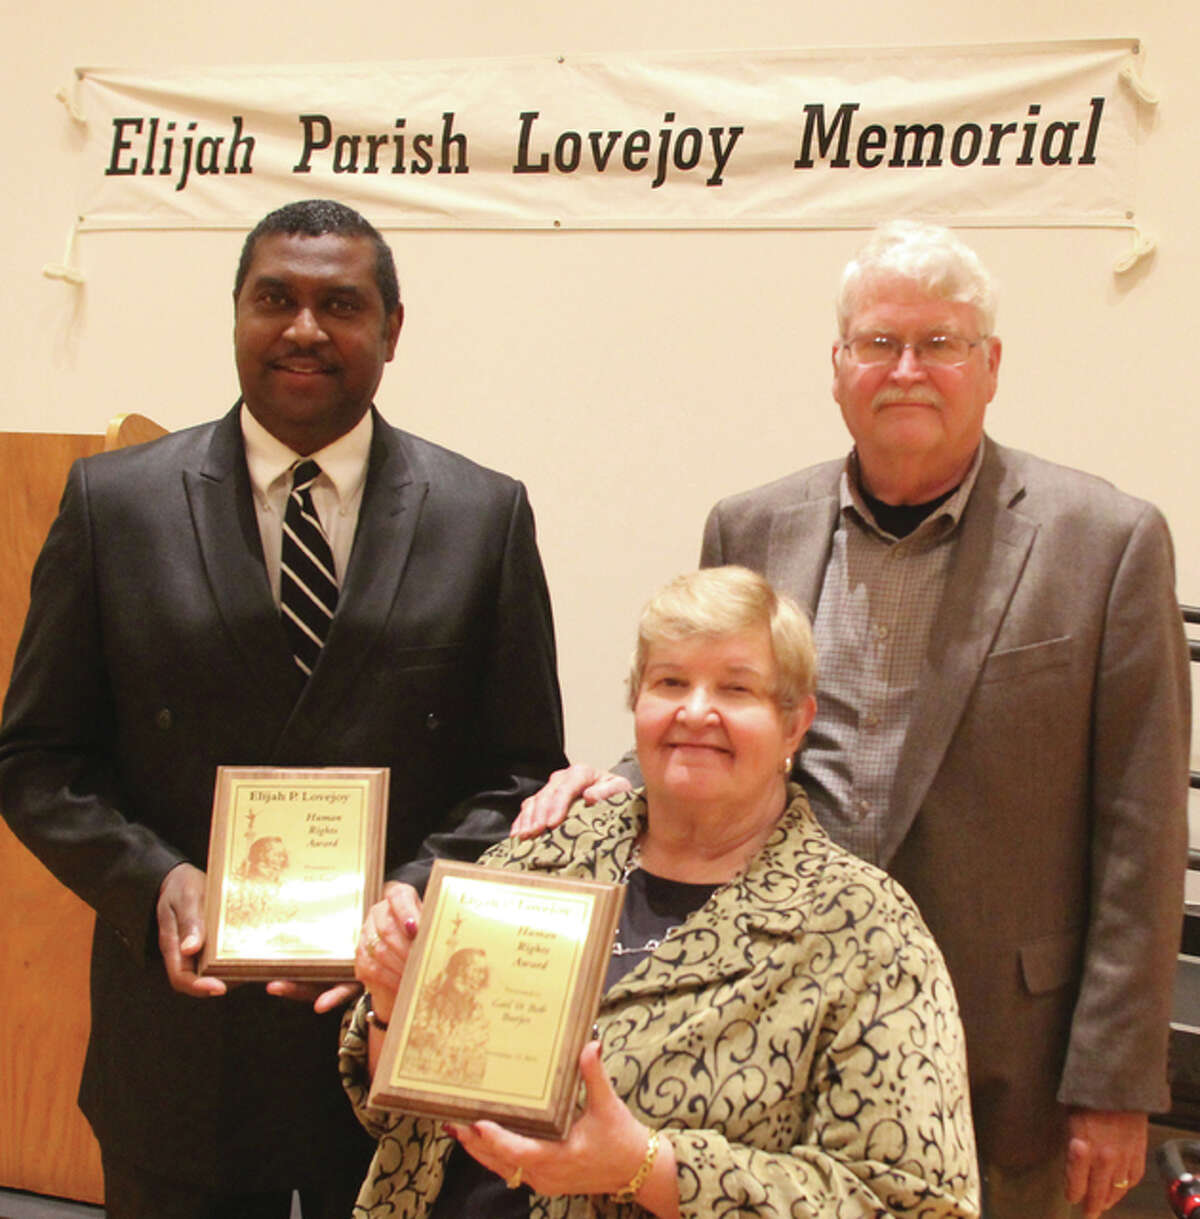 The Rev. Michael Logan, left, Gail Burjes and Robert Burjes received Lovejoy Human Rights Awards at the Elijah P. Lovejoy Memorial Annual Dinner, held Friday.